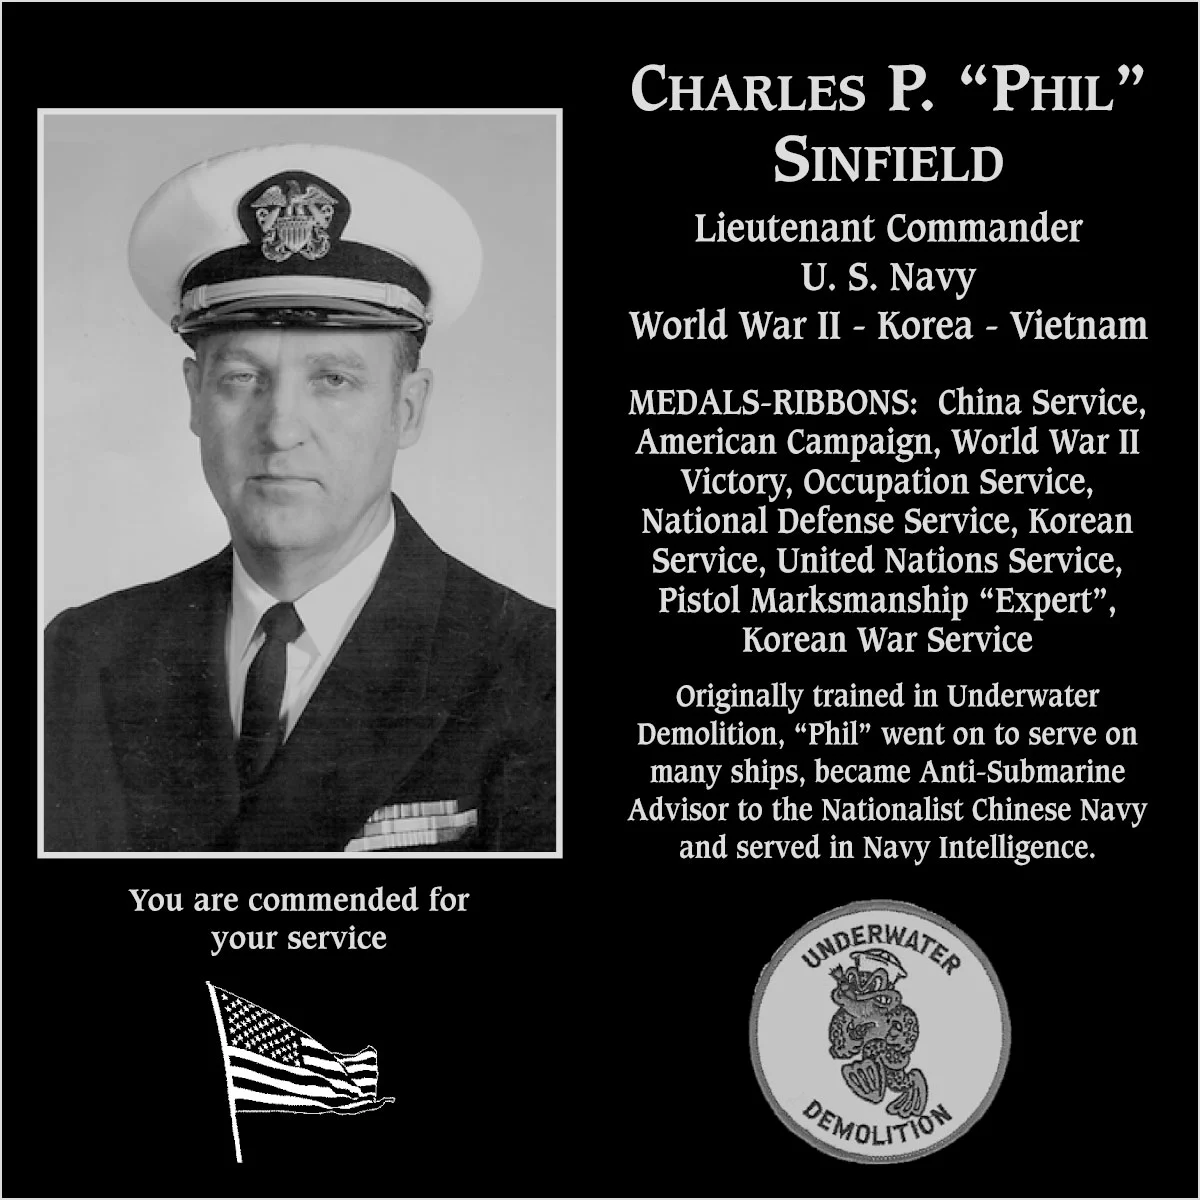 Charles P “Phil” Sinfield